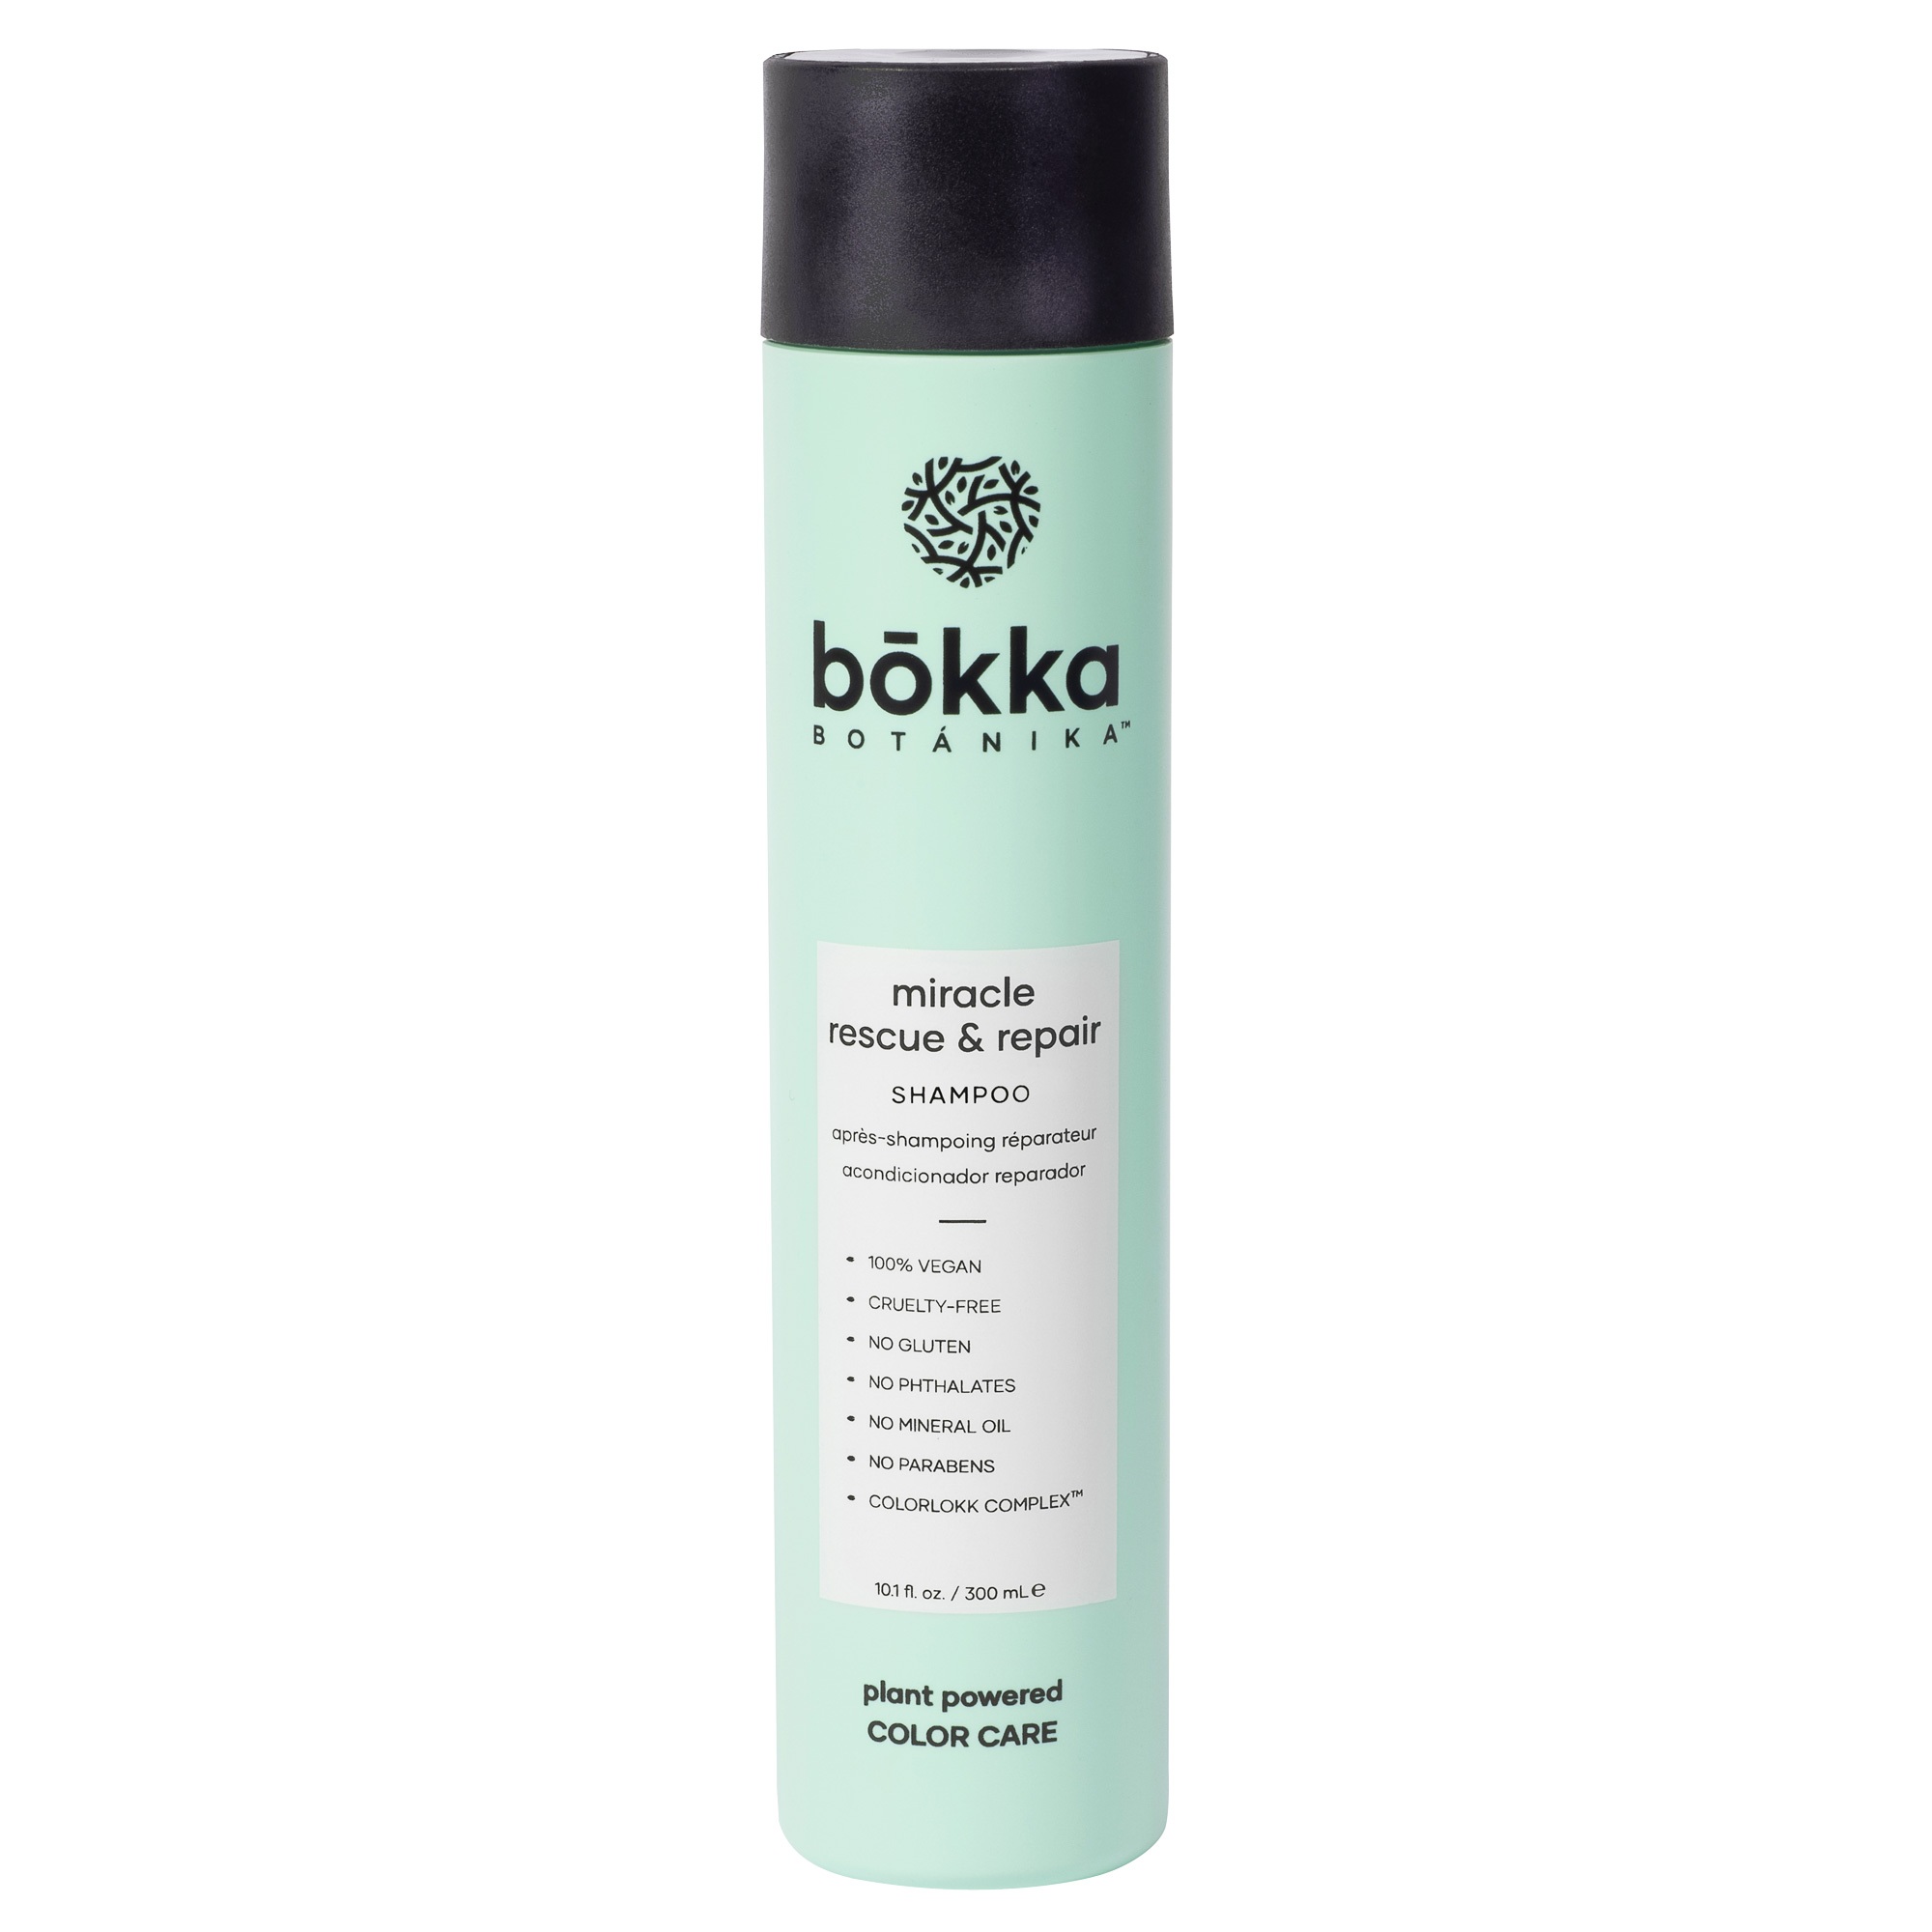 bokka BOTANICA Miracle Rescue & Repair Shampoo 10.1oz